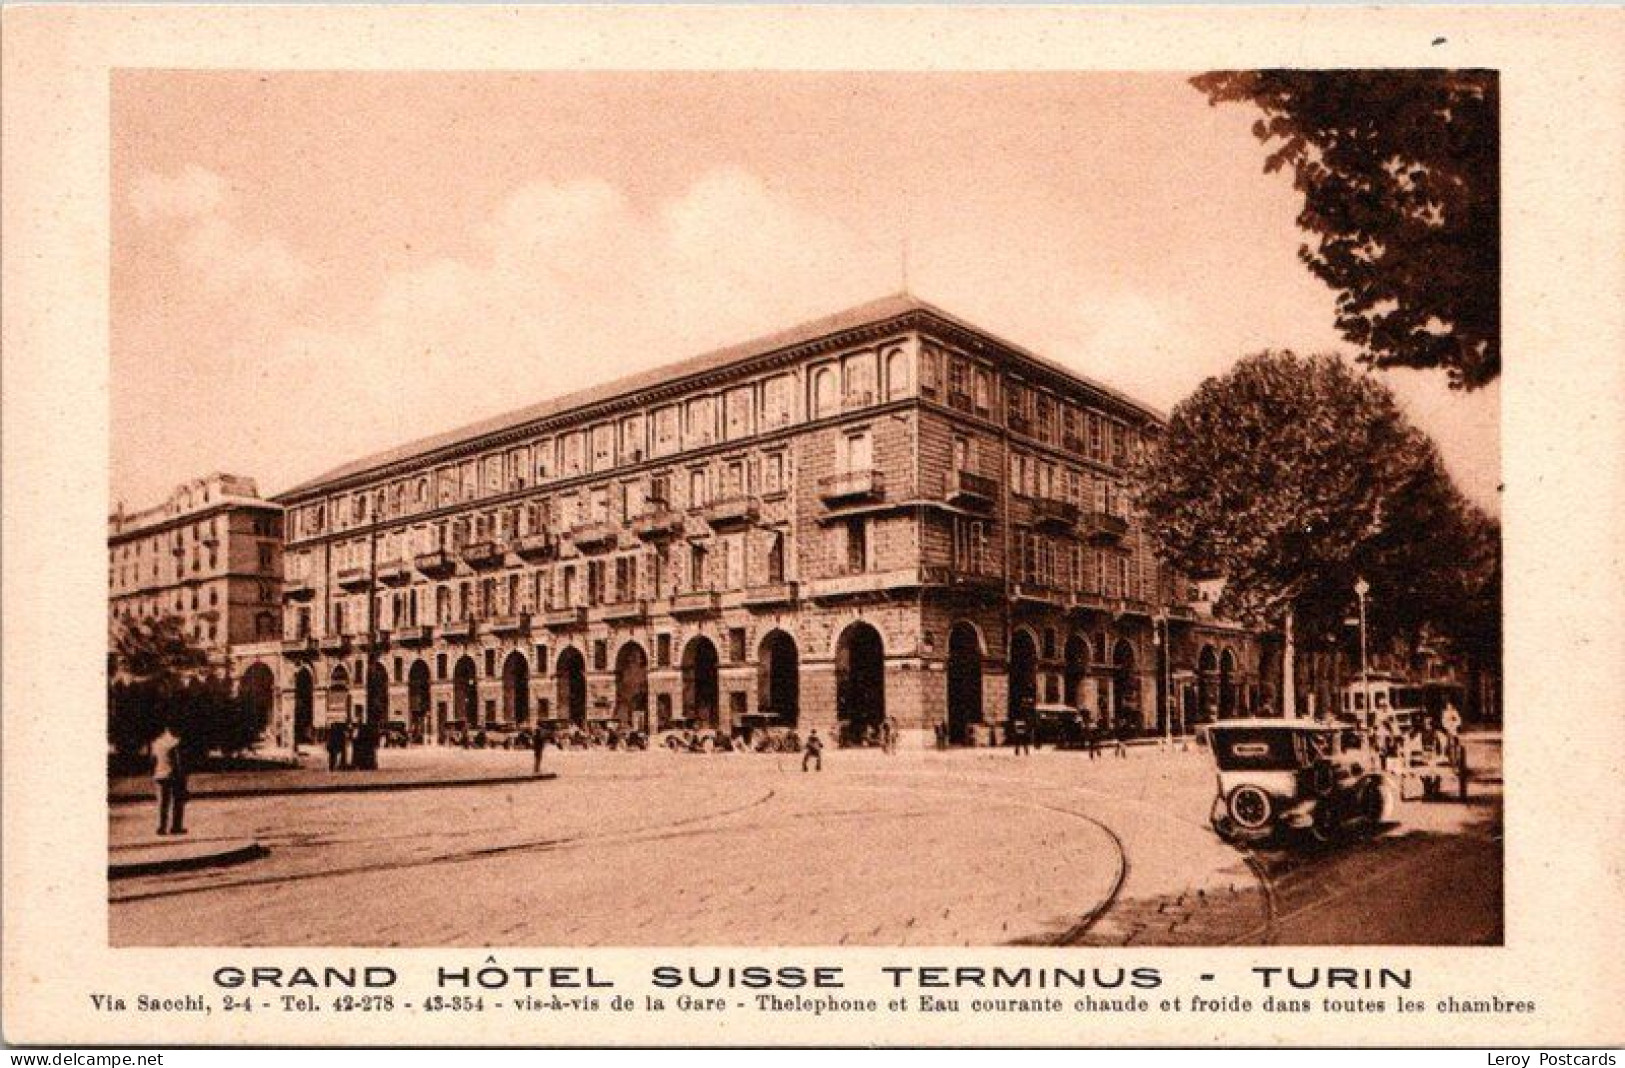 Grand Hotel Suisse Terminus, Turin, Italy - Bars, Hotels & Restaurants